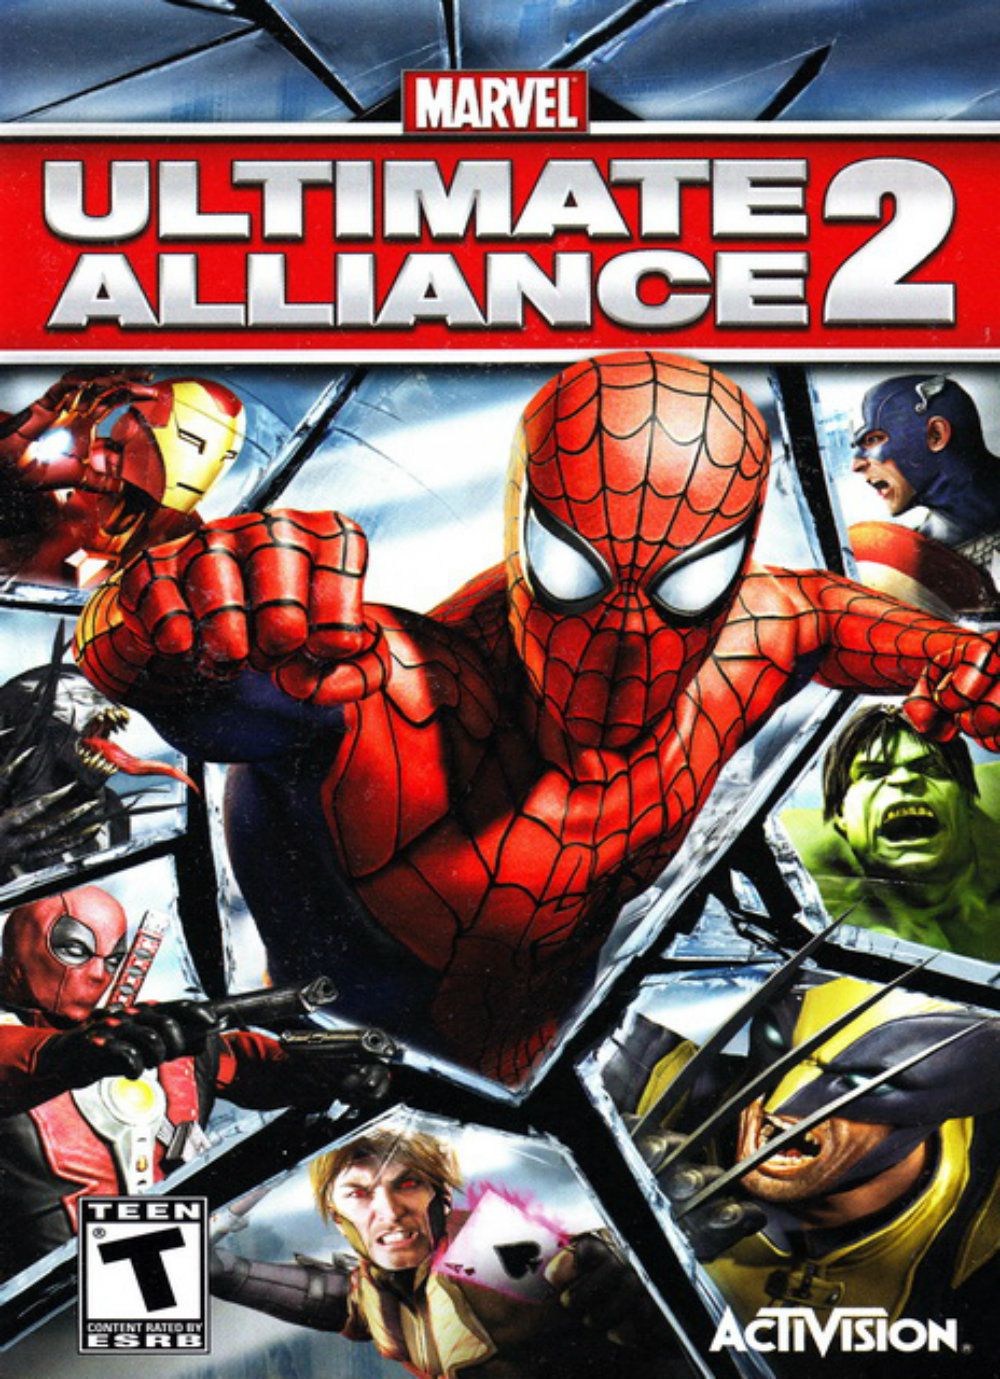 marvel ultimate alliance cheats pc